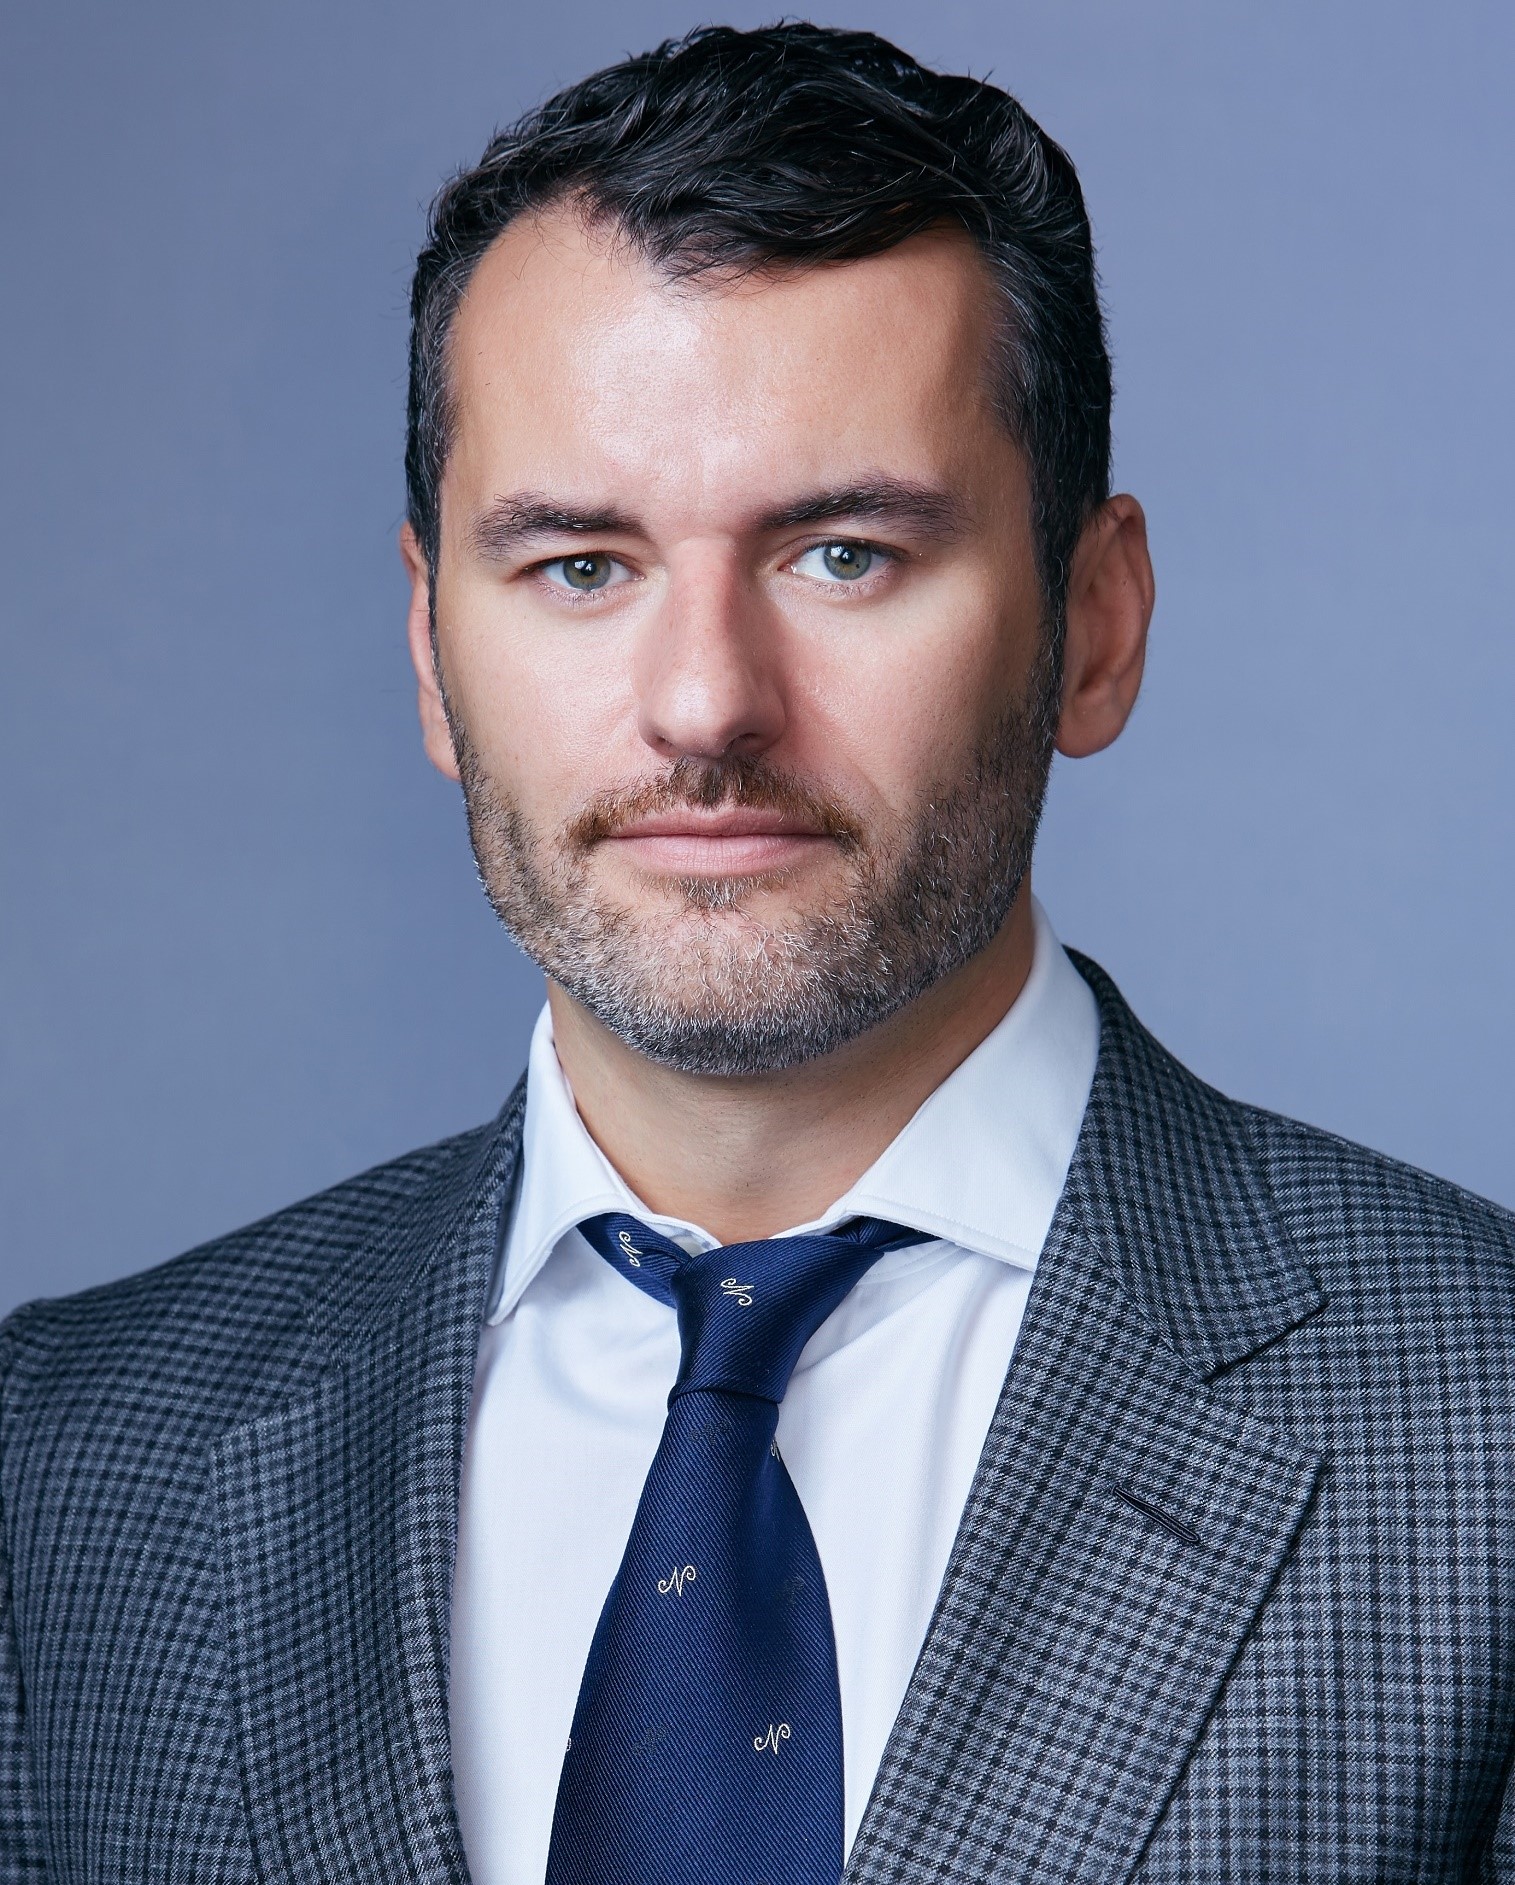 RUSAL appoints Roman Andryushin as Deputy CEO 